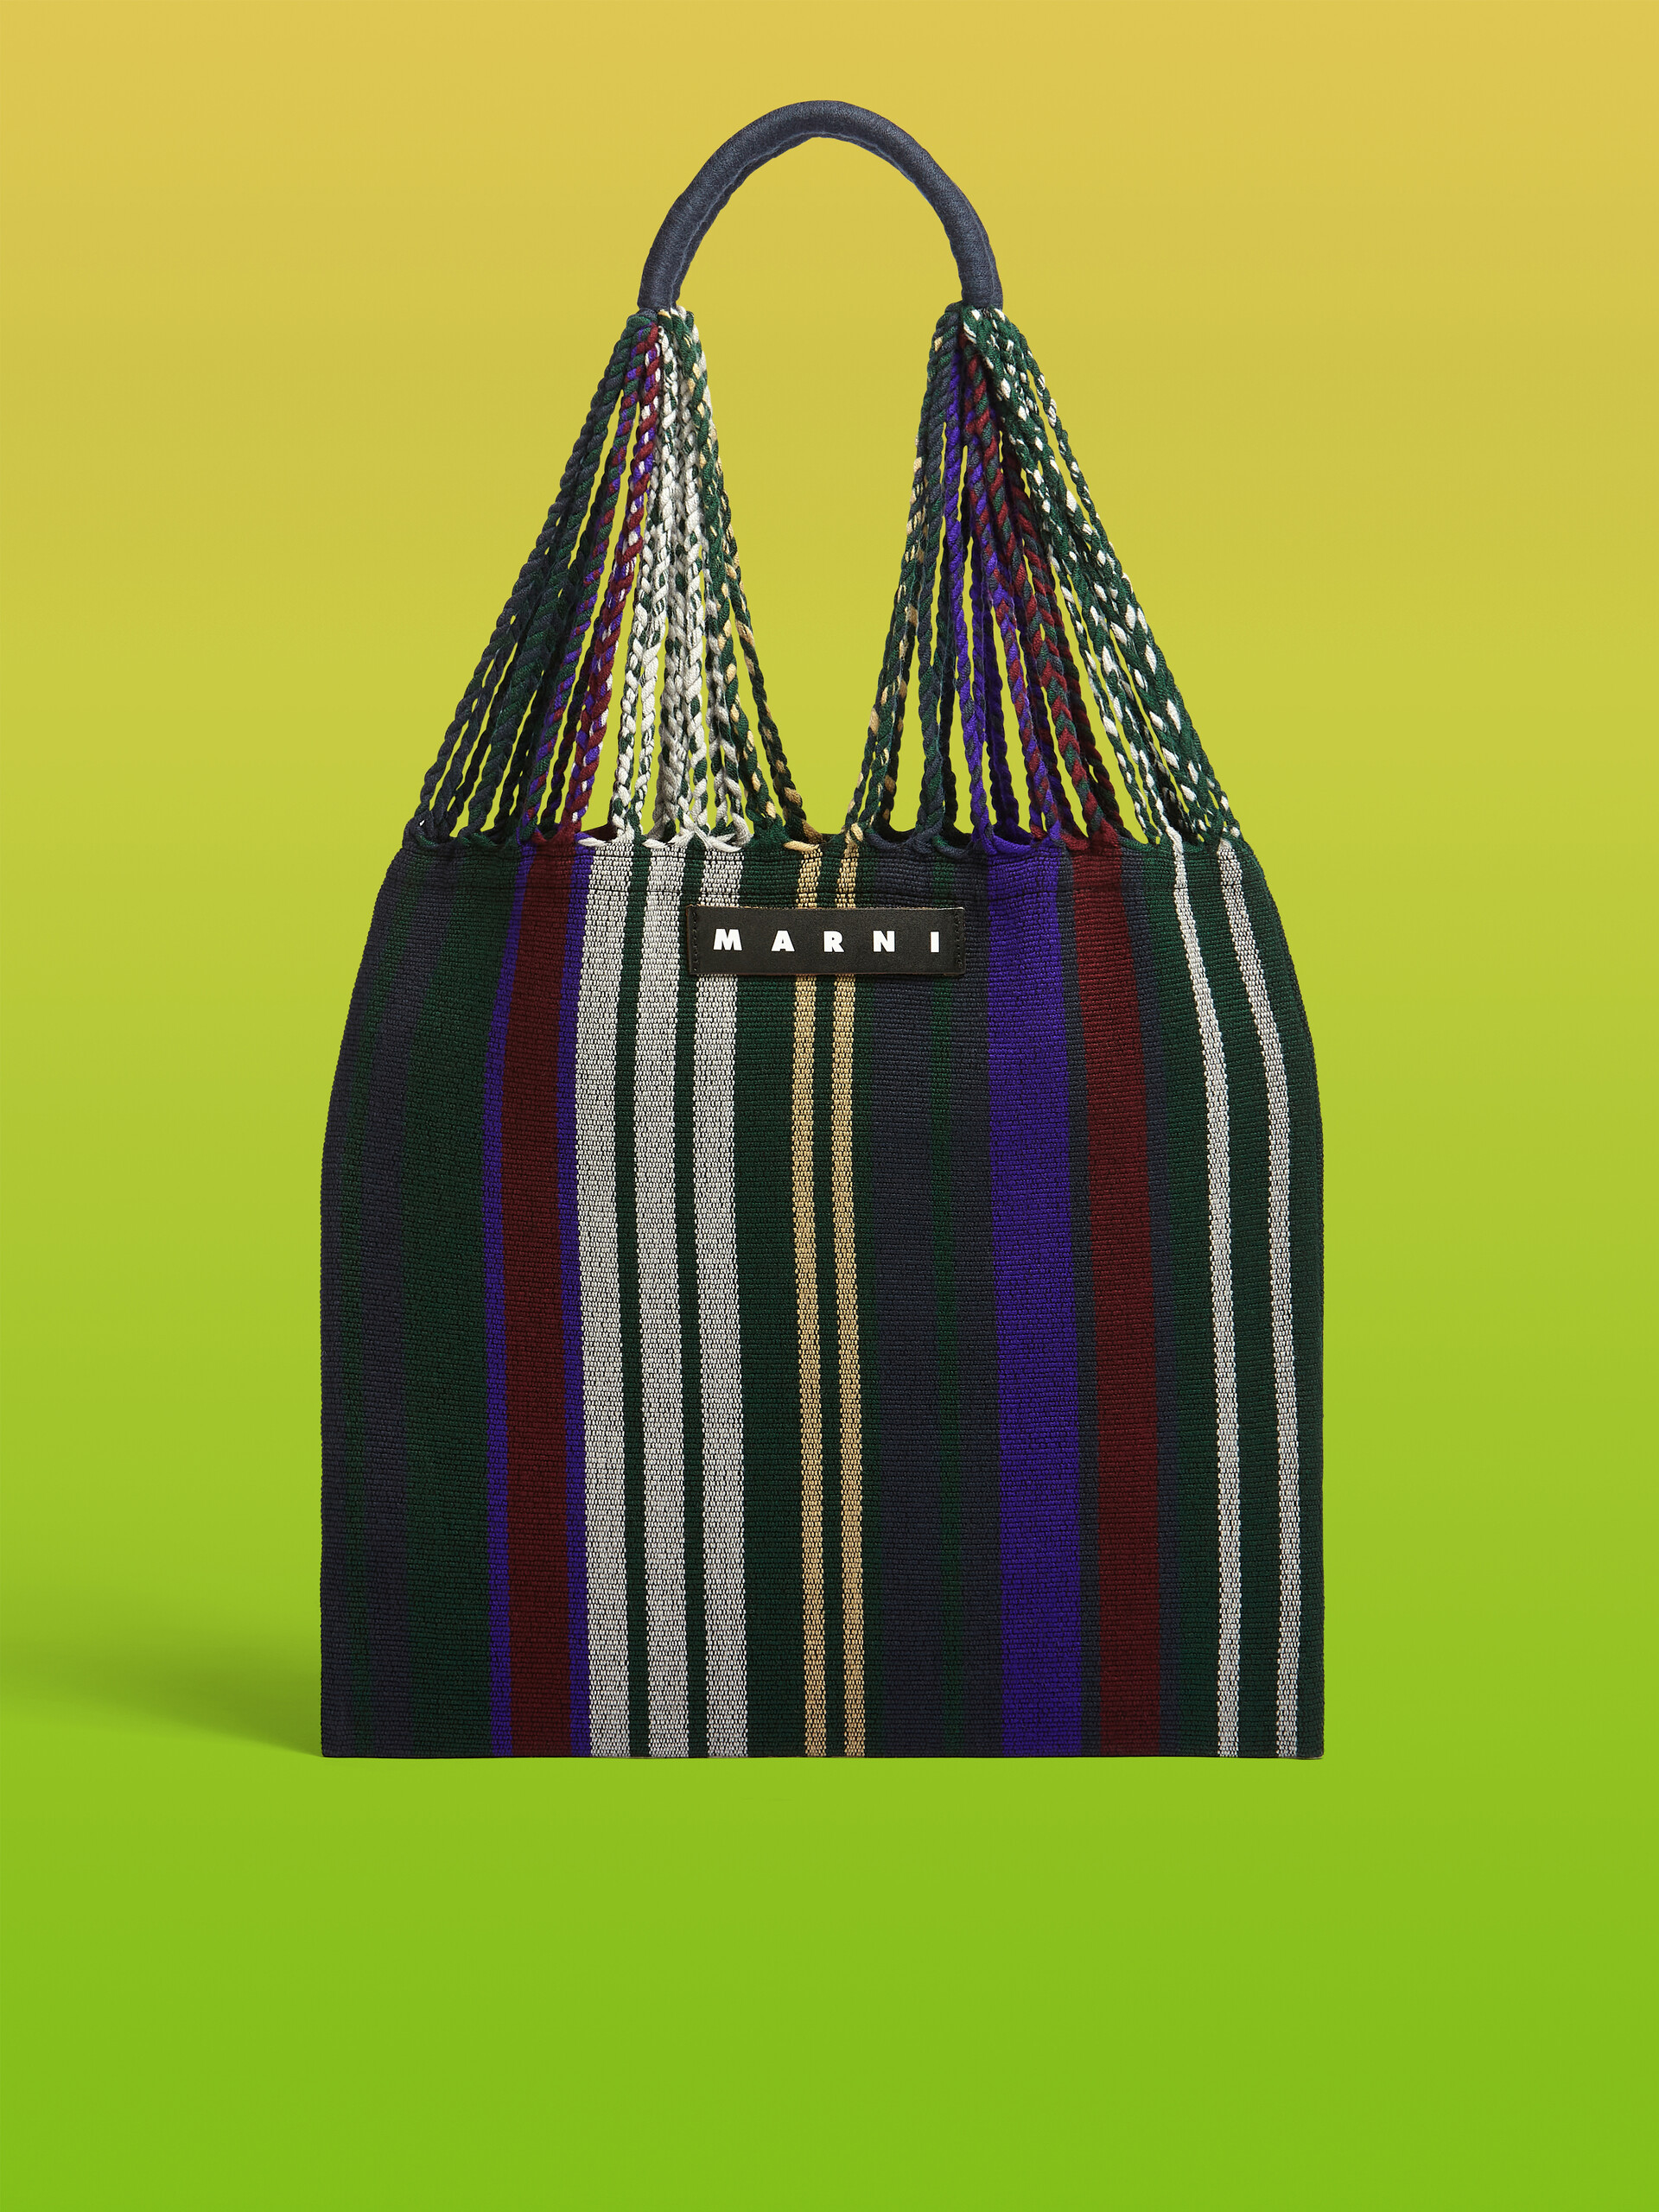 MARNI MARKET HAMMOCK bag in multicolour lilac polyester - Bags - Image 1